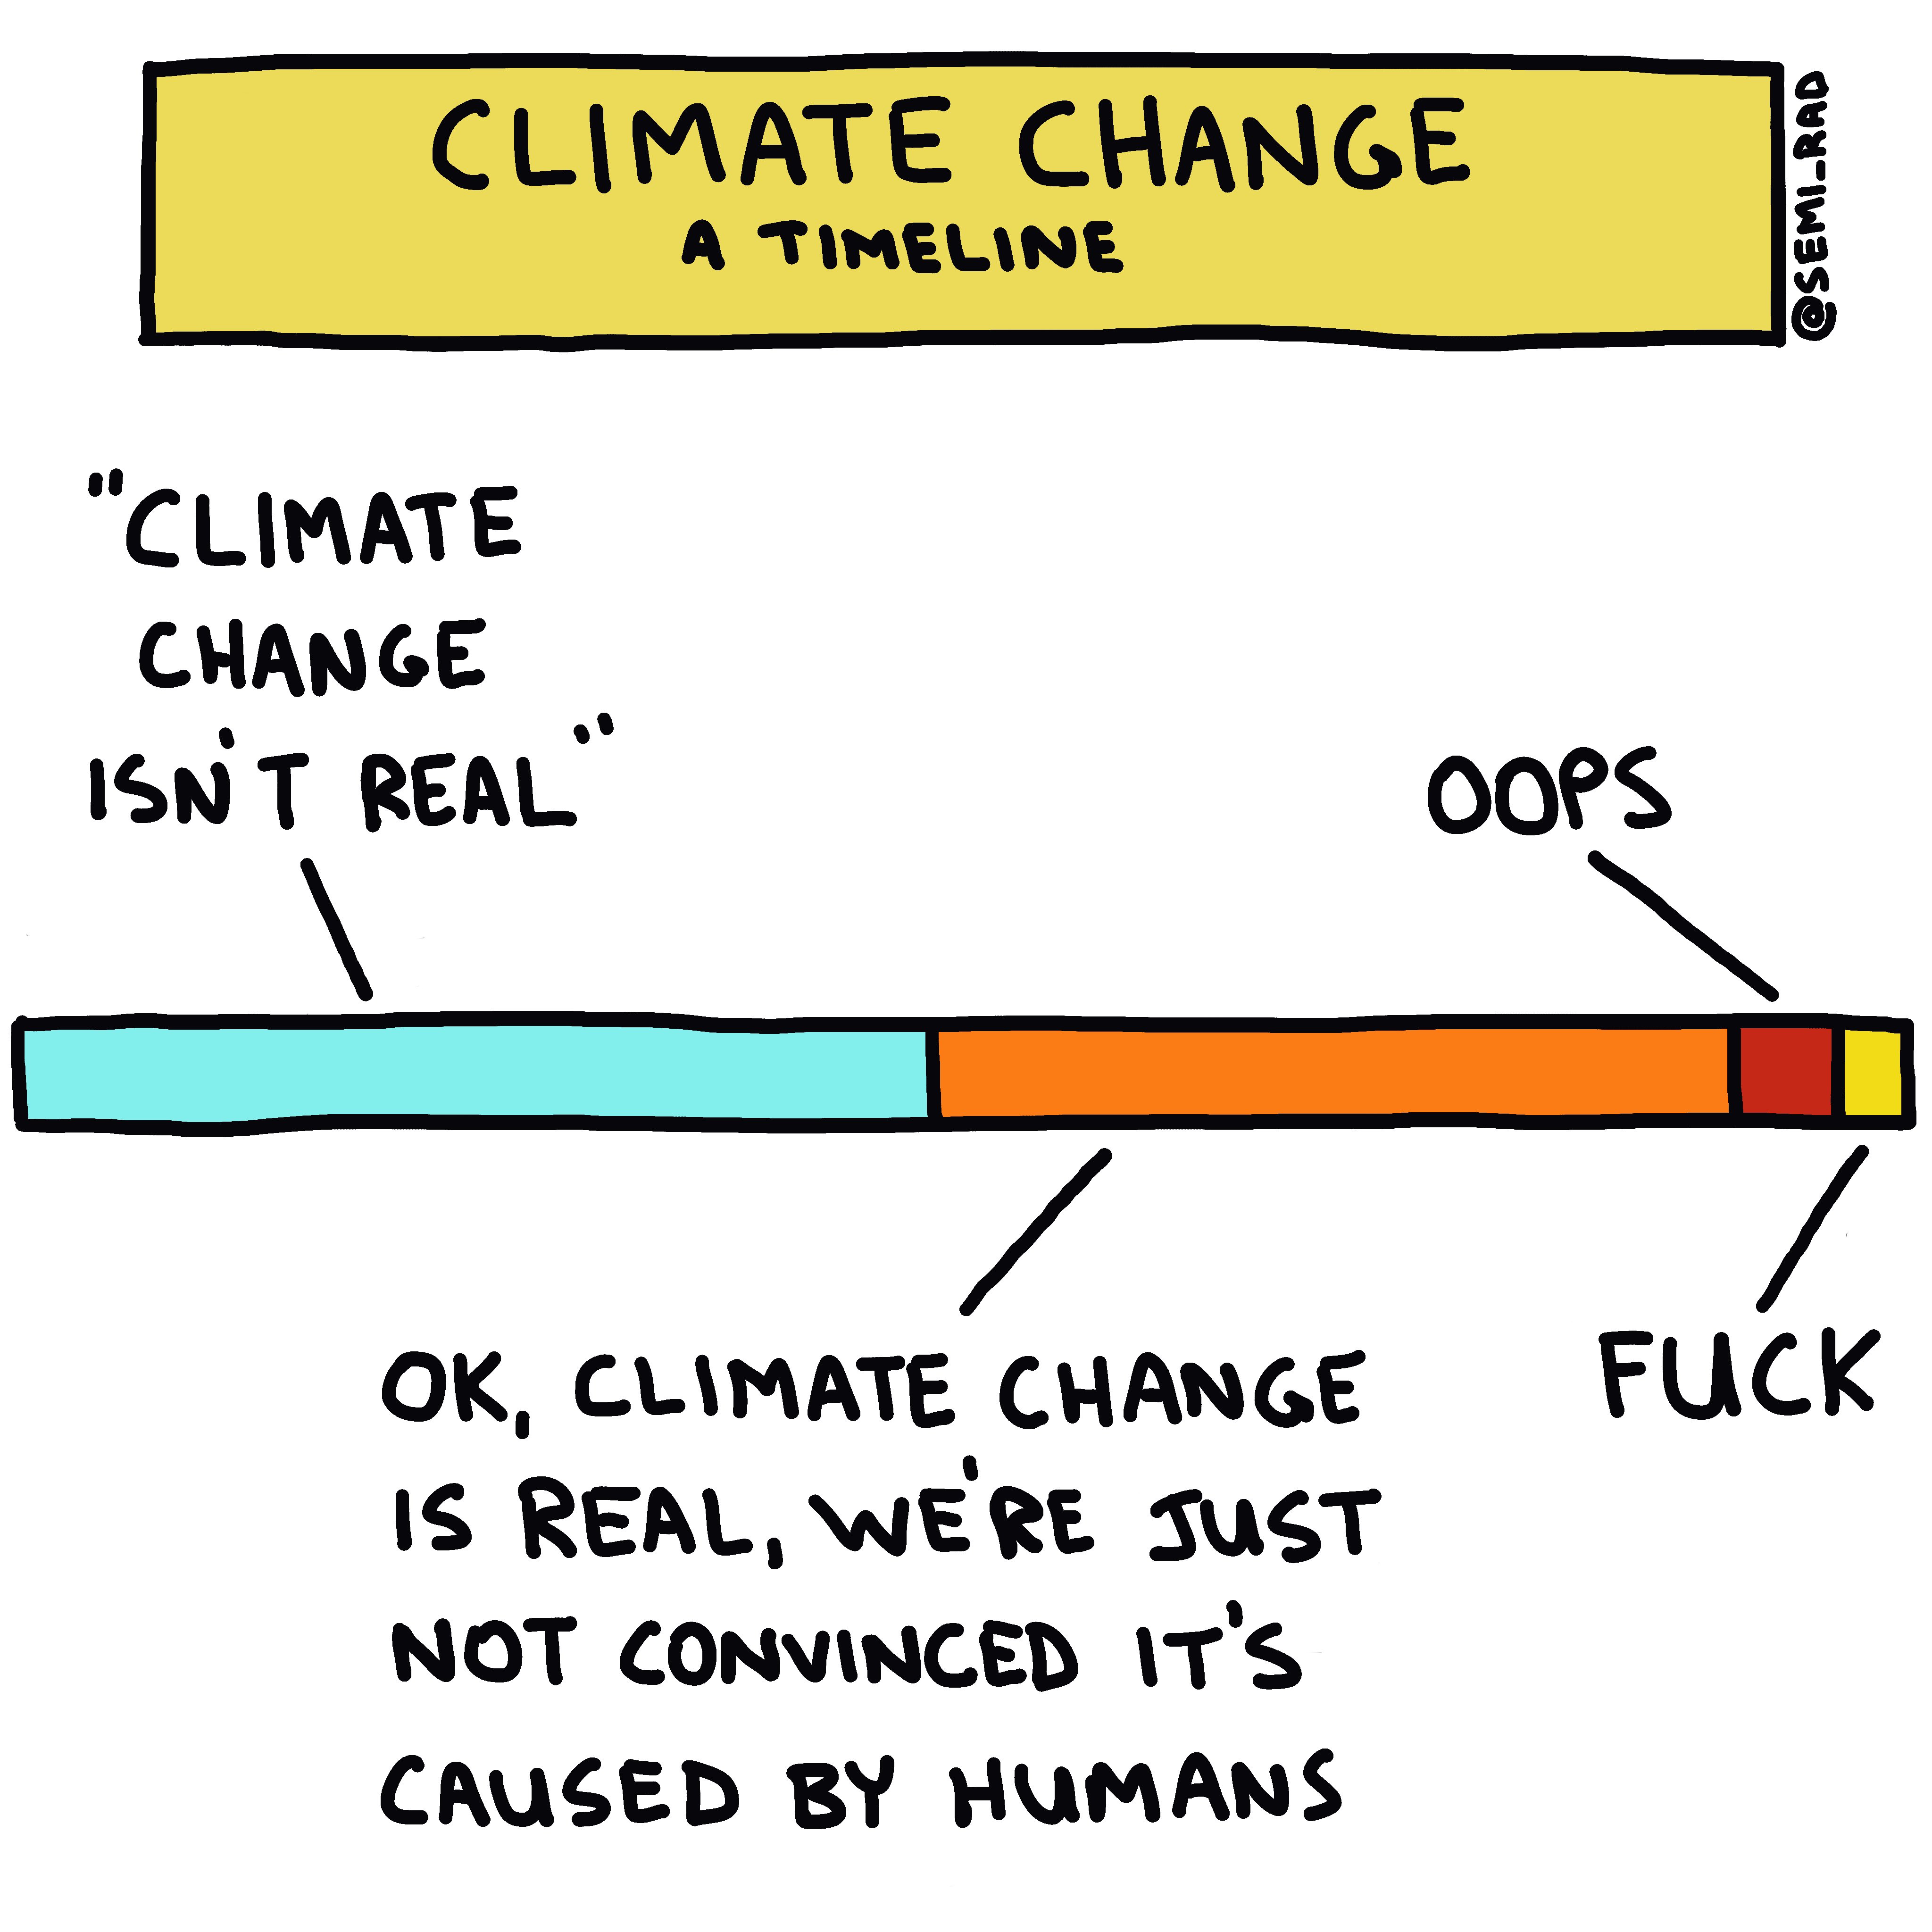 Climate change: a timeline